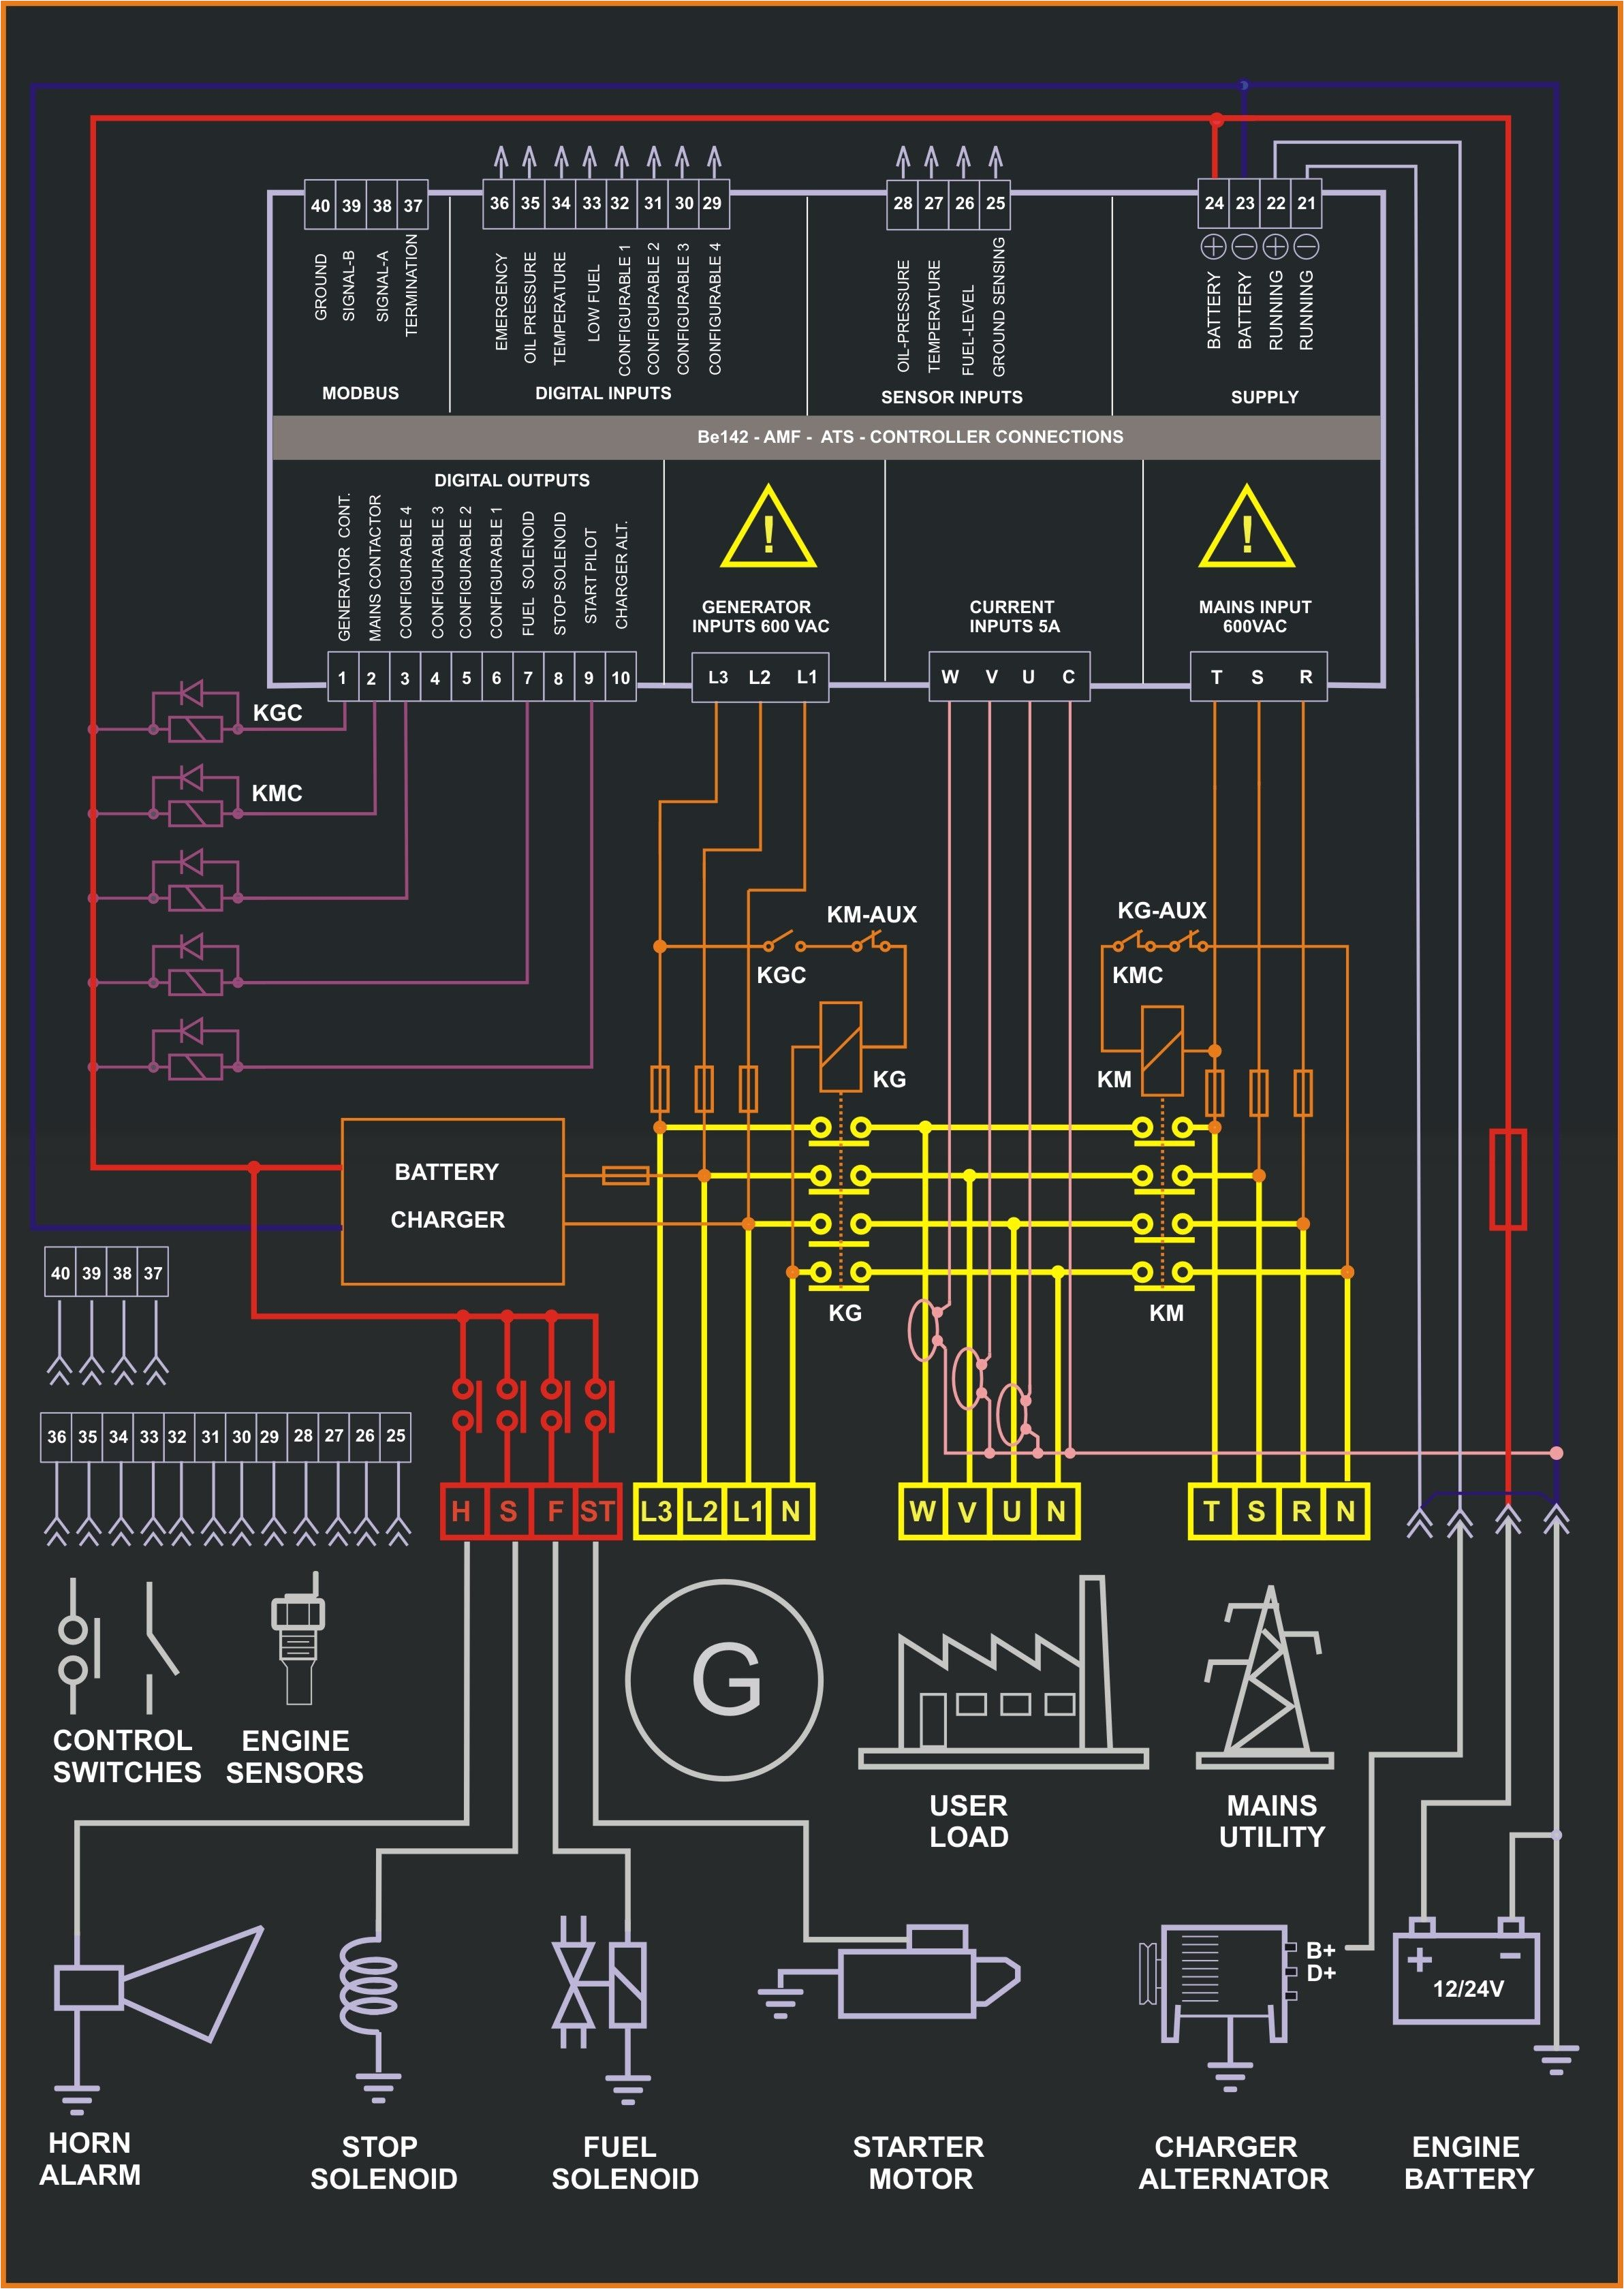 electrical panel board wiring diagram pdf fresh 41 awesome circuit hvac control panel wiring diagram pdf control panel wiring diagram pdf